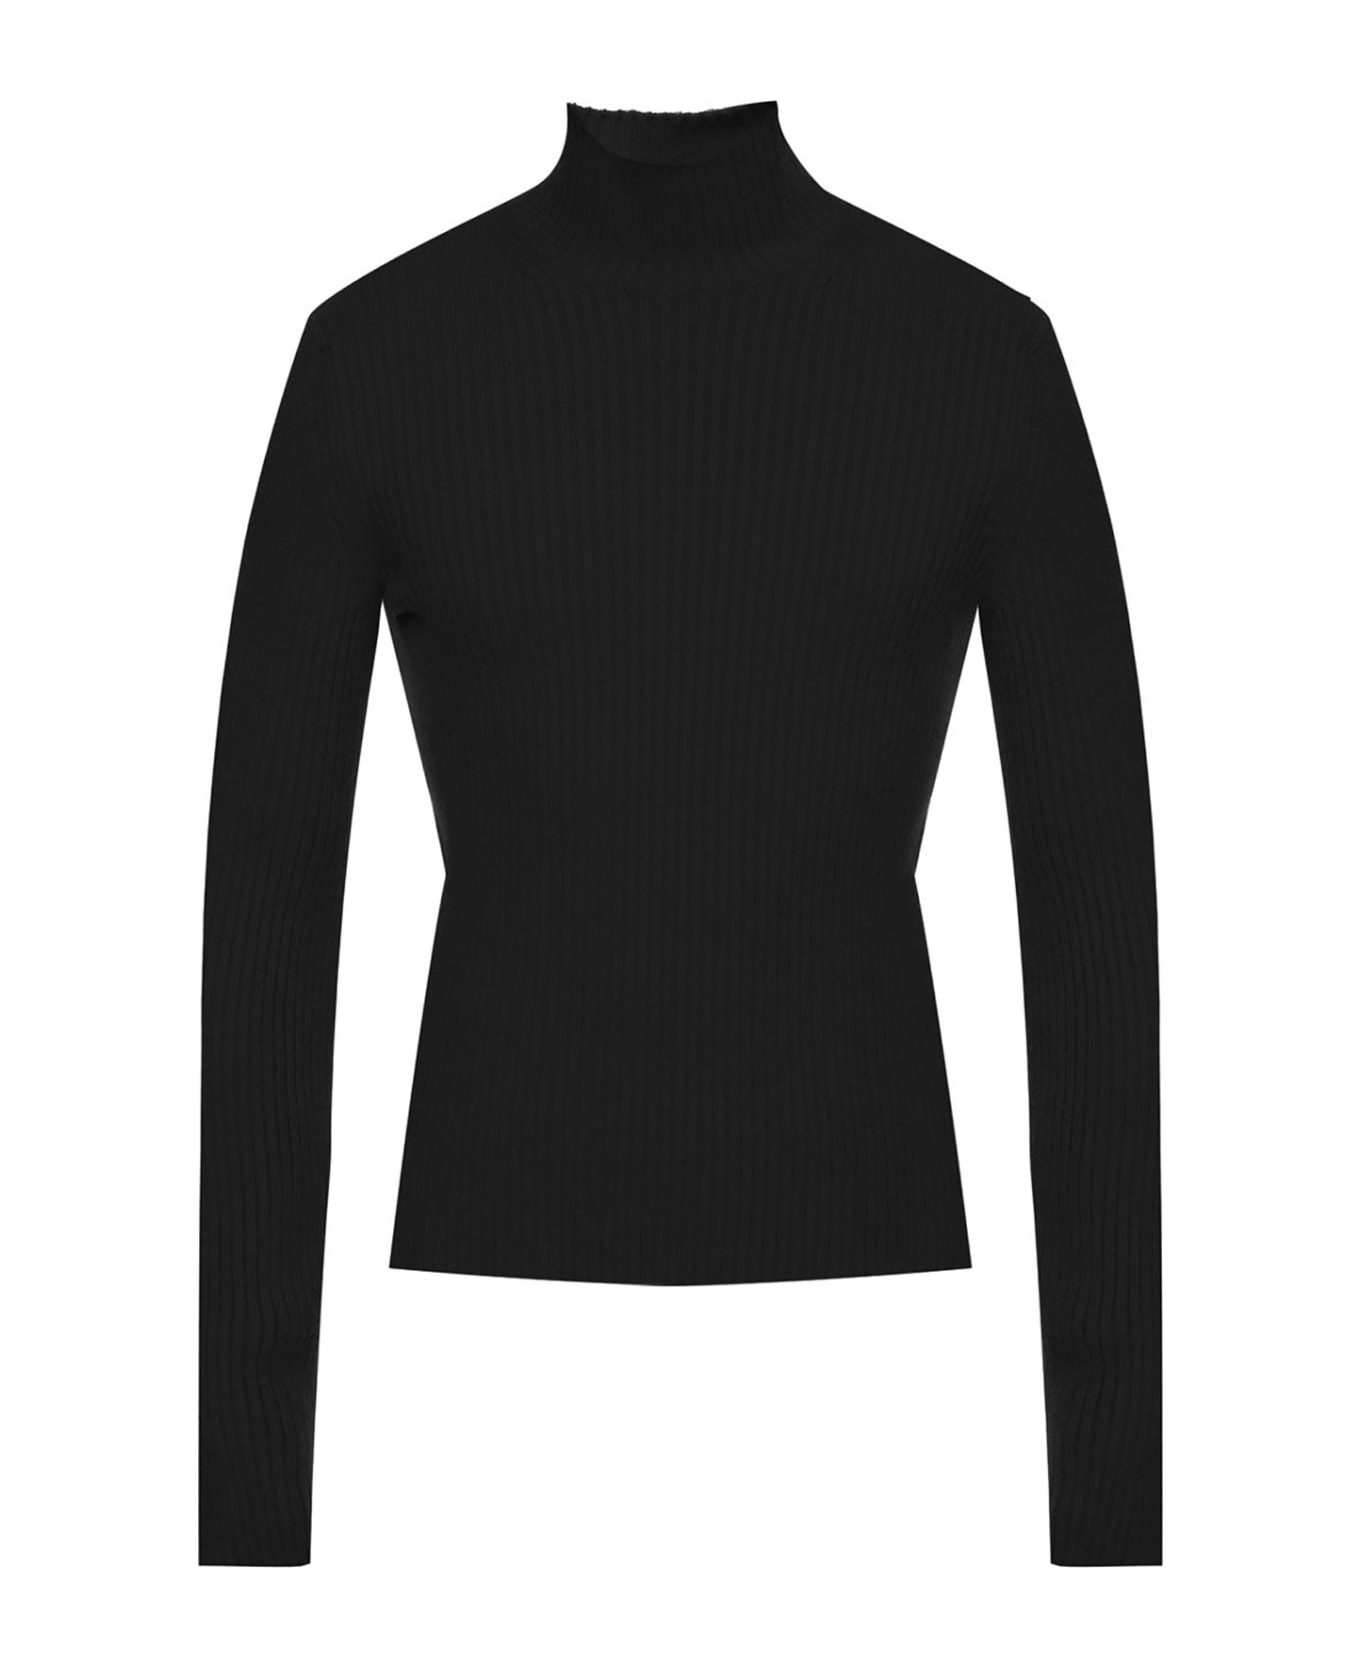 Balenciaga Ribbed Turtleneck Knit - Black